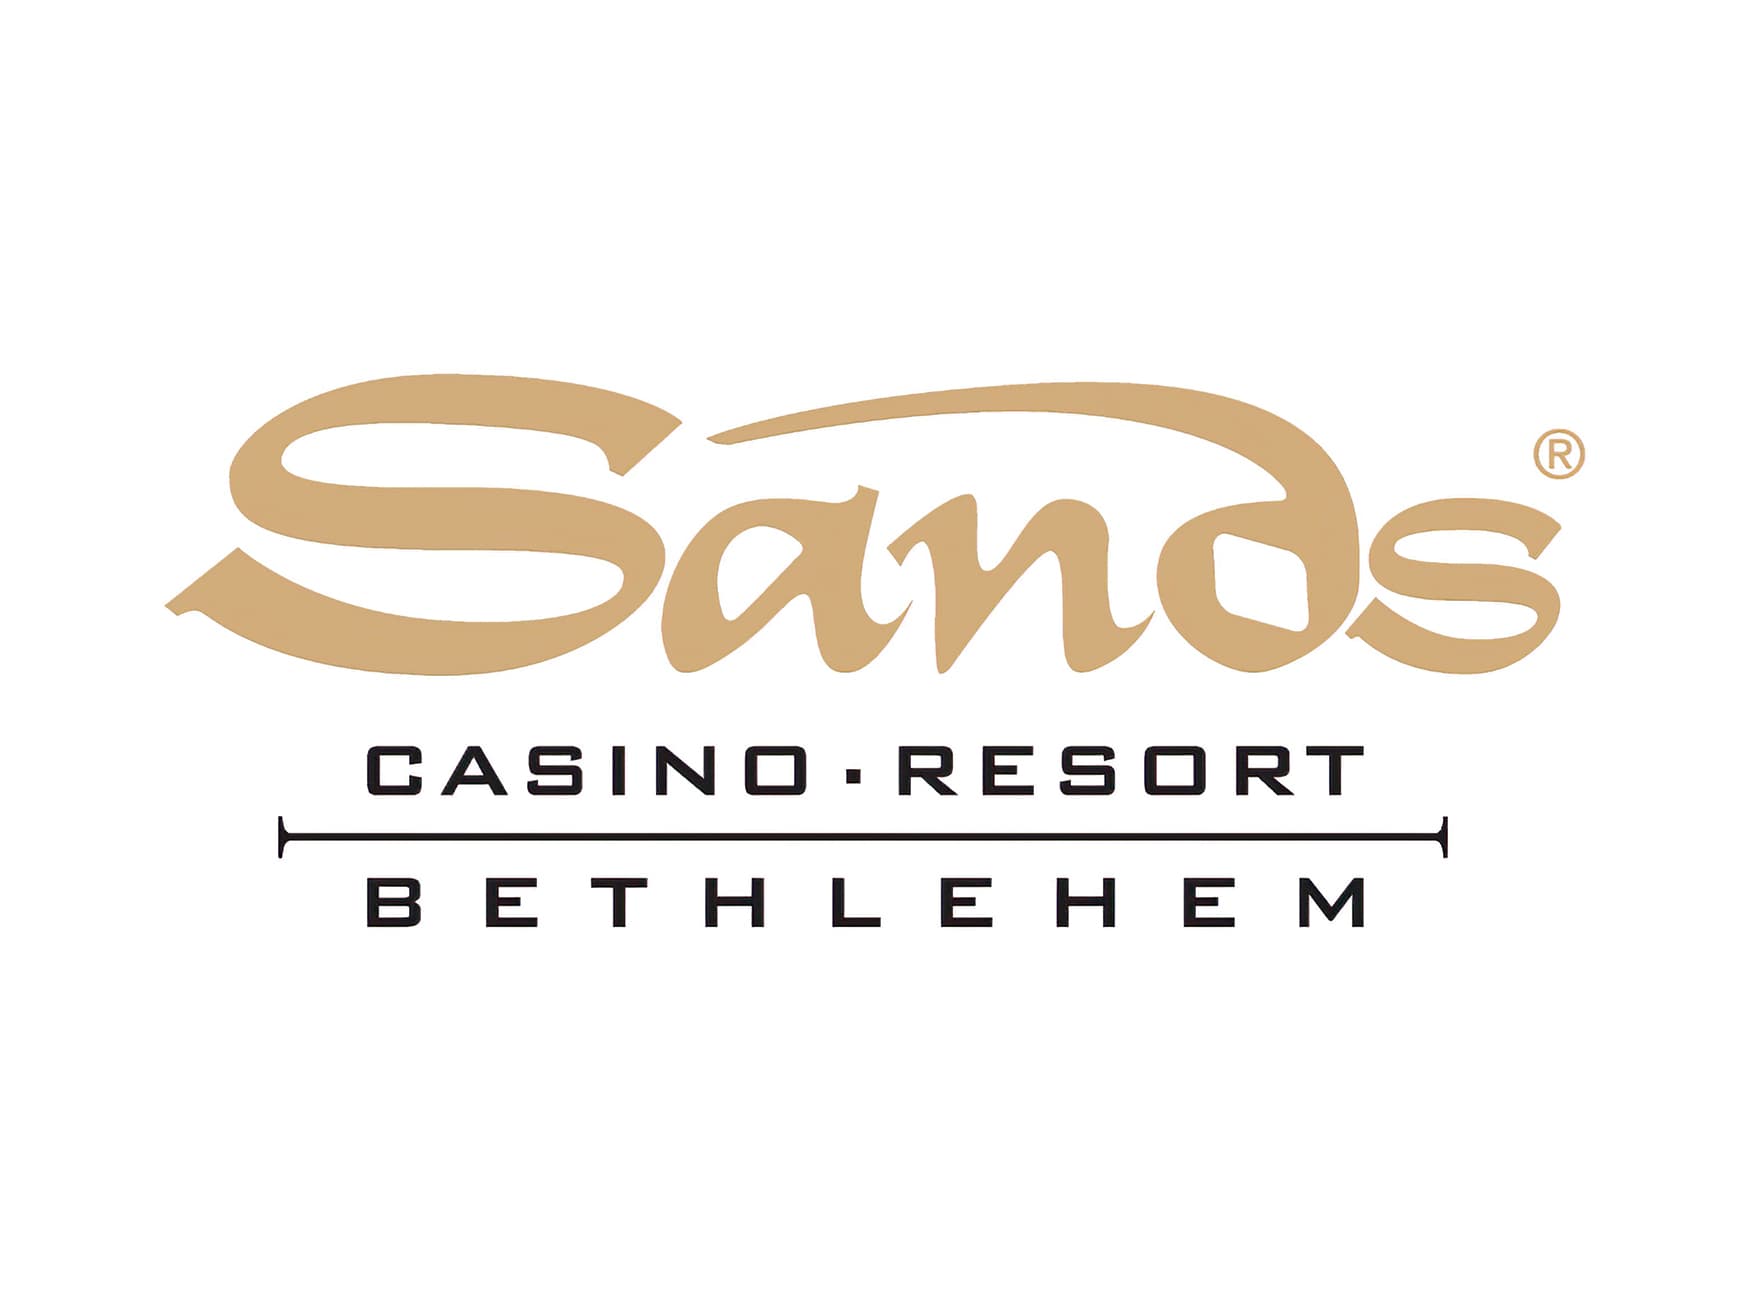 Sands Bethlehem Casino Resort. Environmental Graphics and Wayfinding System Design. Hospitality Design. Branding and Logo Design.